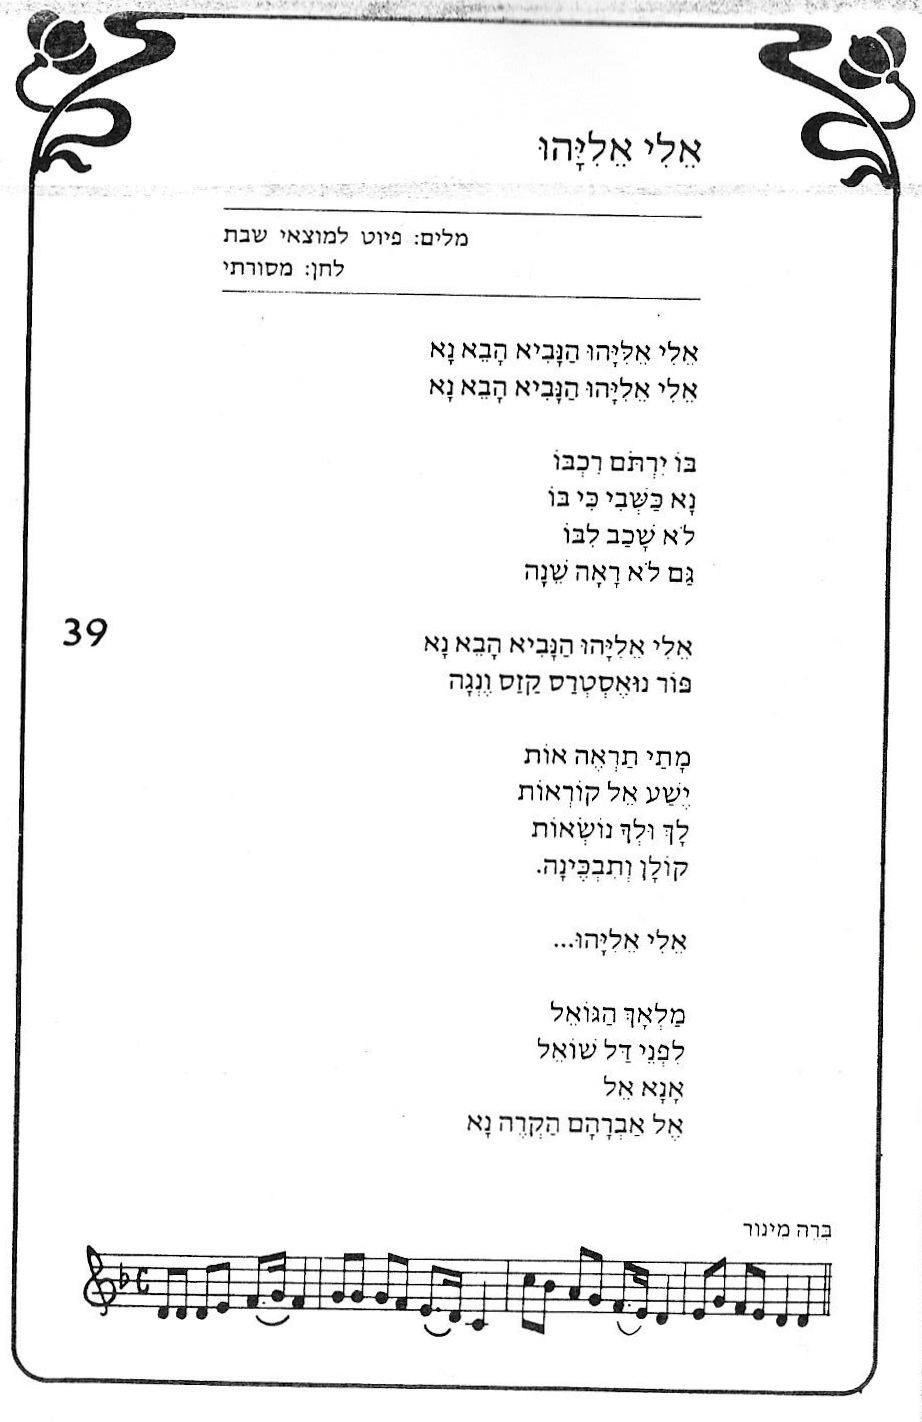 “Eli Eliyahu:” The Havdalah Piyyut and its Melodies